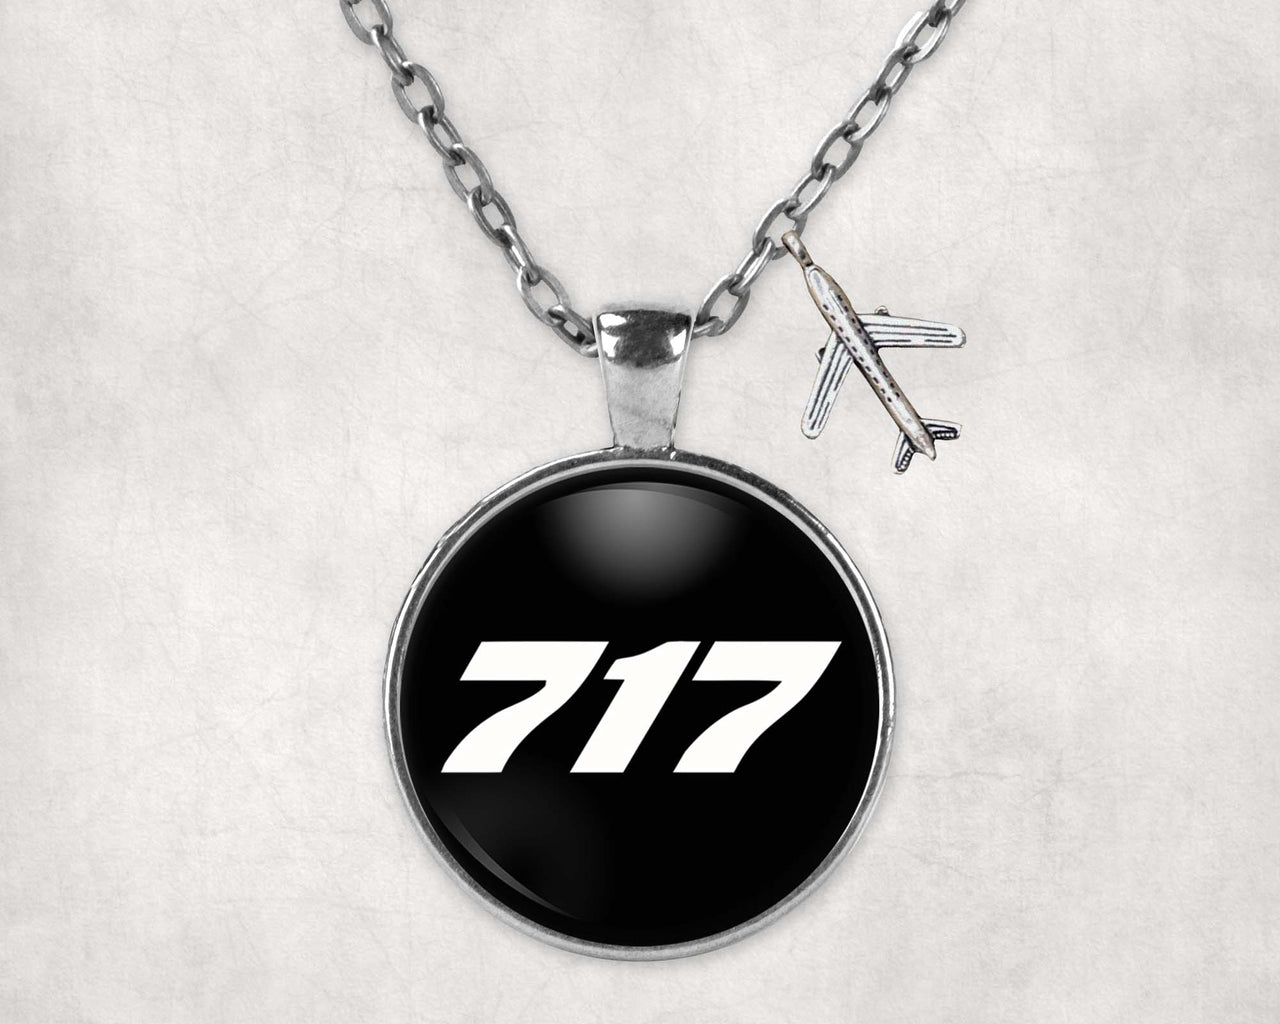 717 Flat Text Designed Necklaces